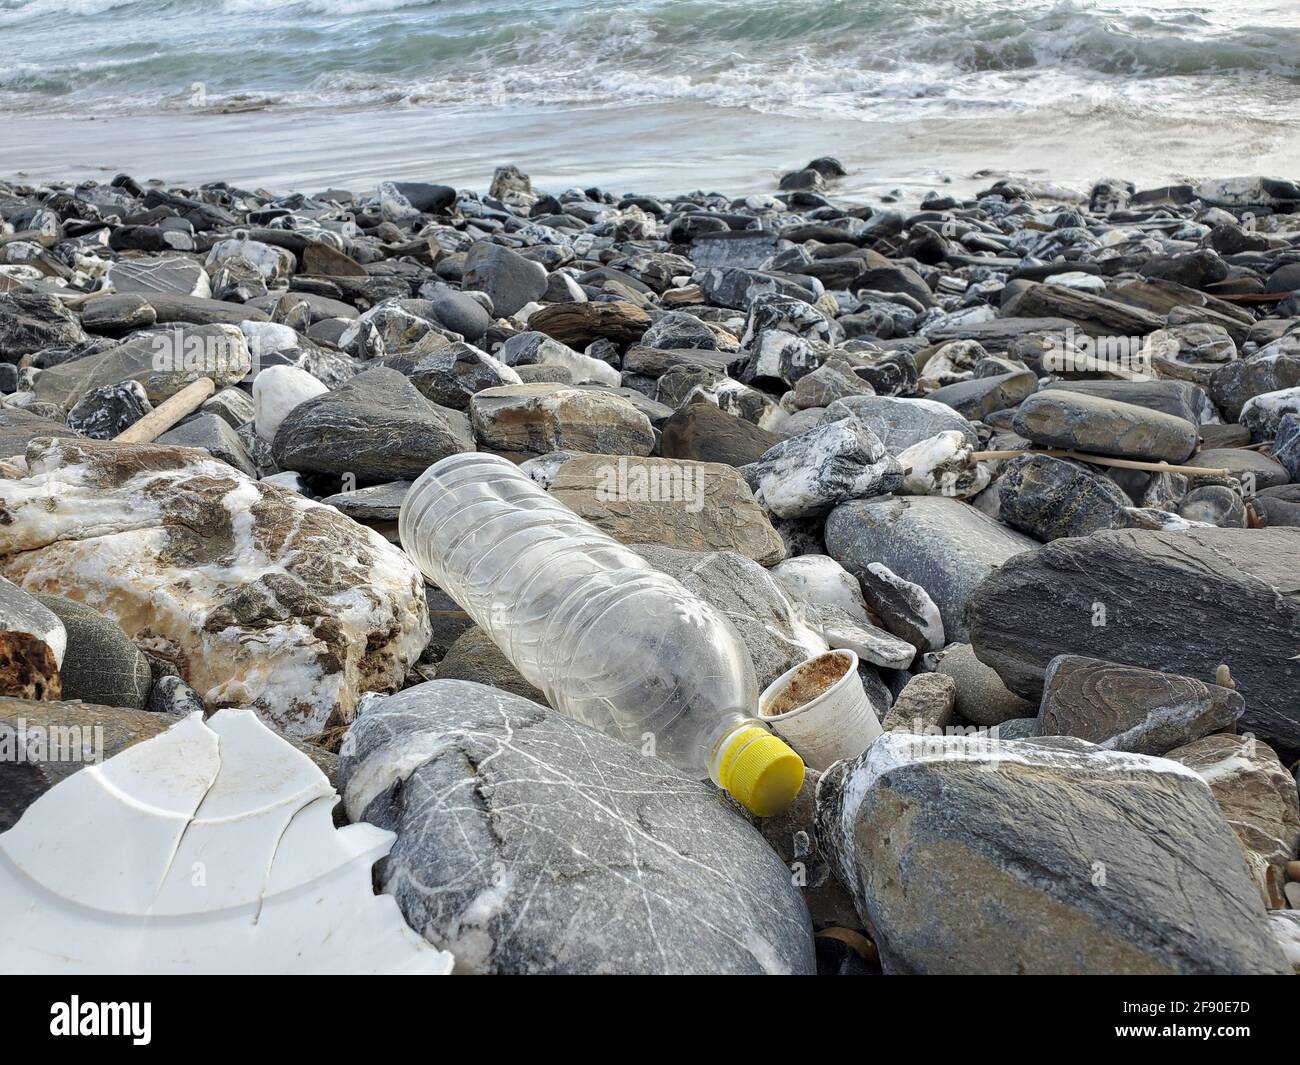 Marine sea ecosystem contaminated with plastic debris pollution,environmental wate contamination Stock Photo